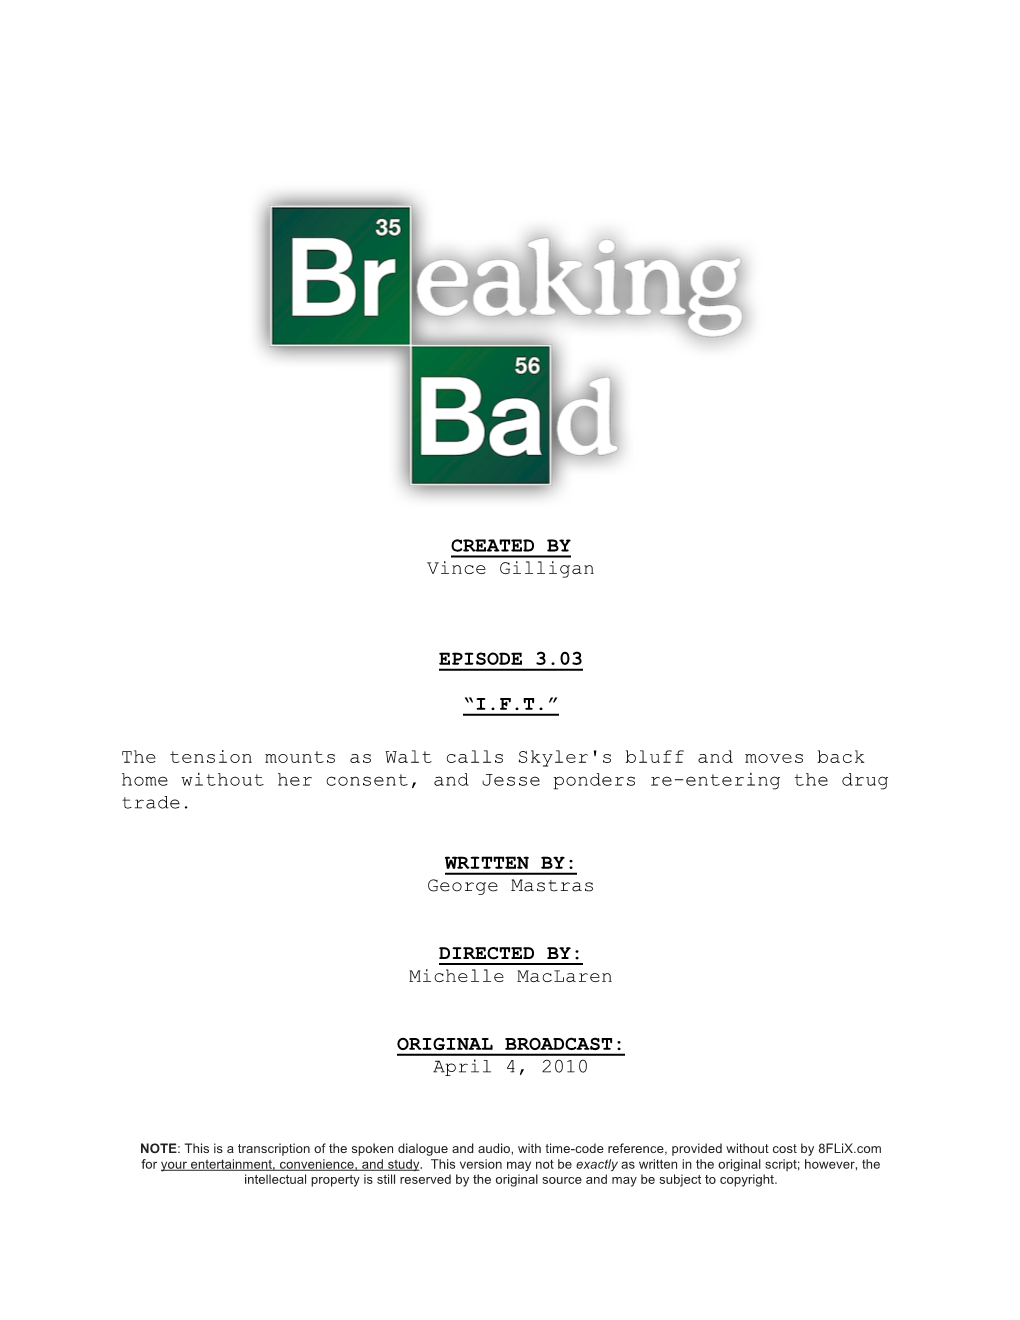 Breaking Bad | Dialogue Transcript